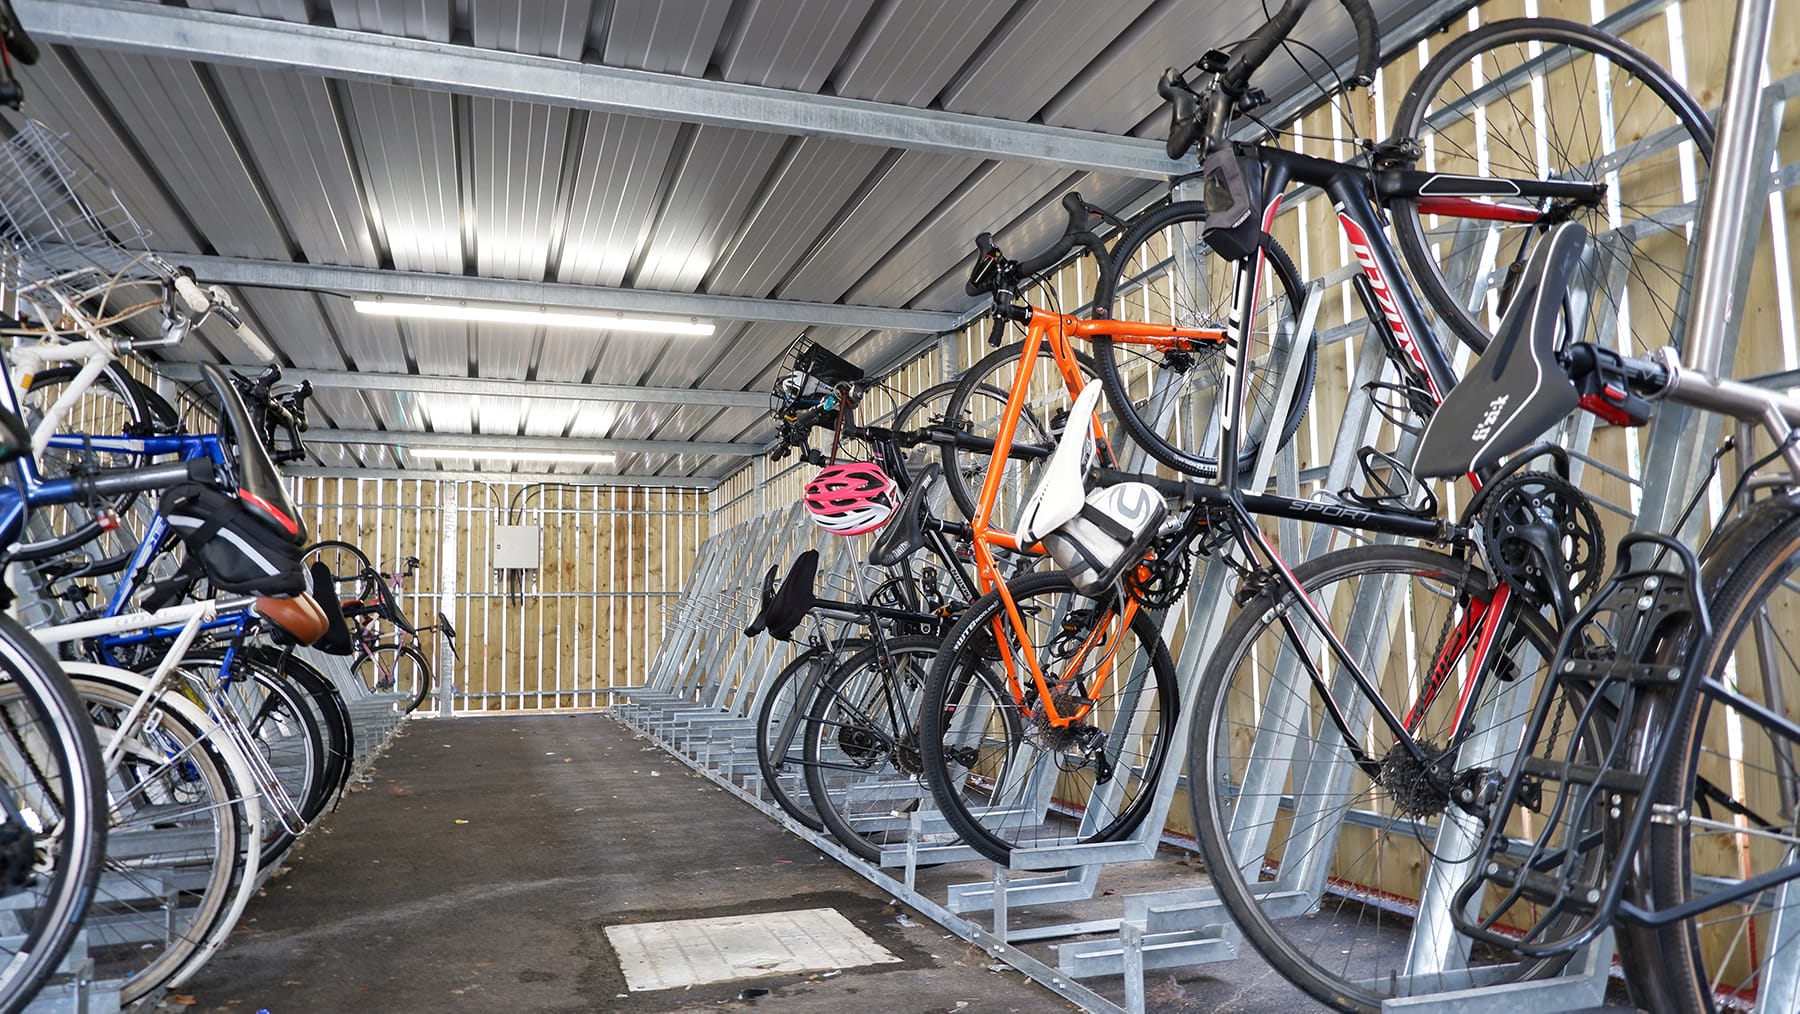 nhs kingston cycle shelter bike racks